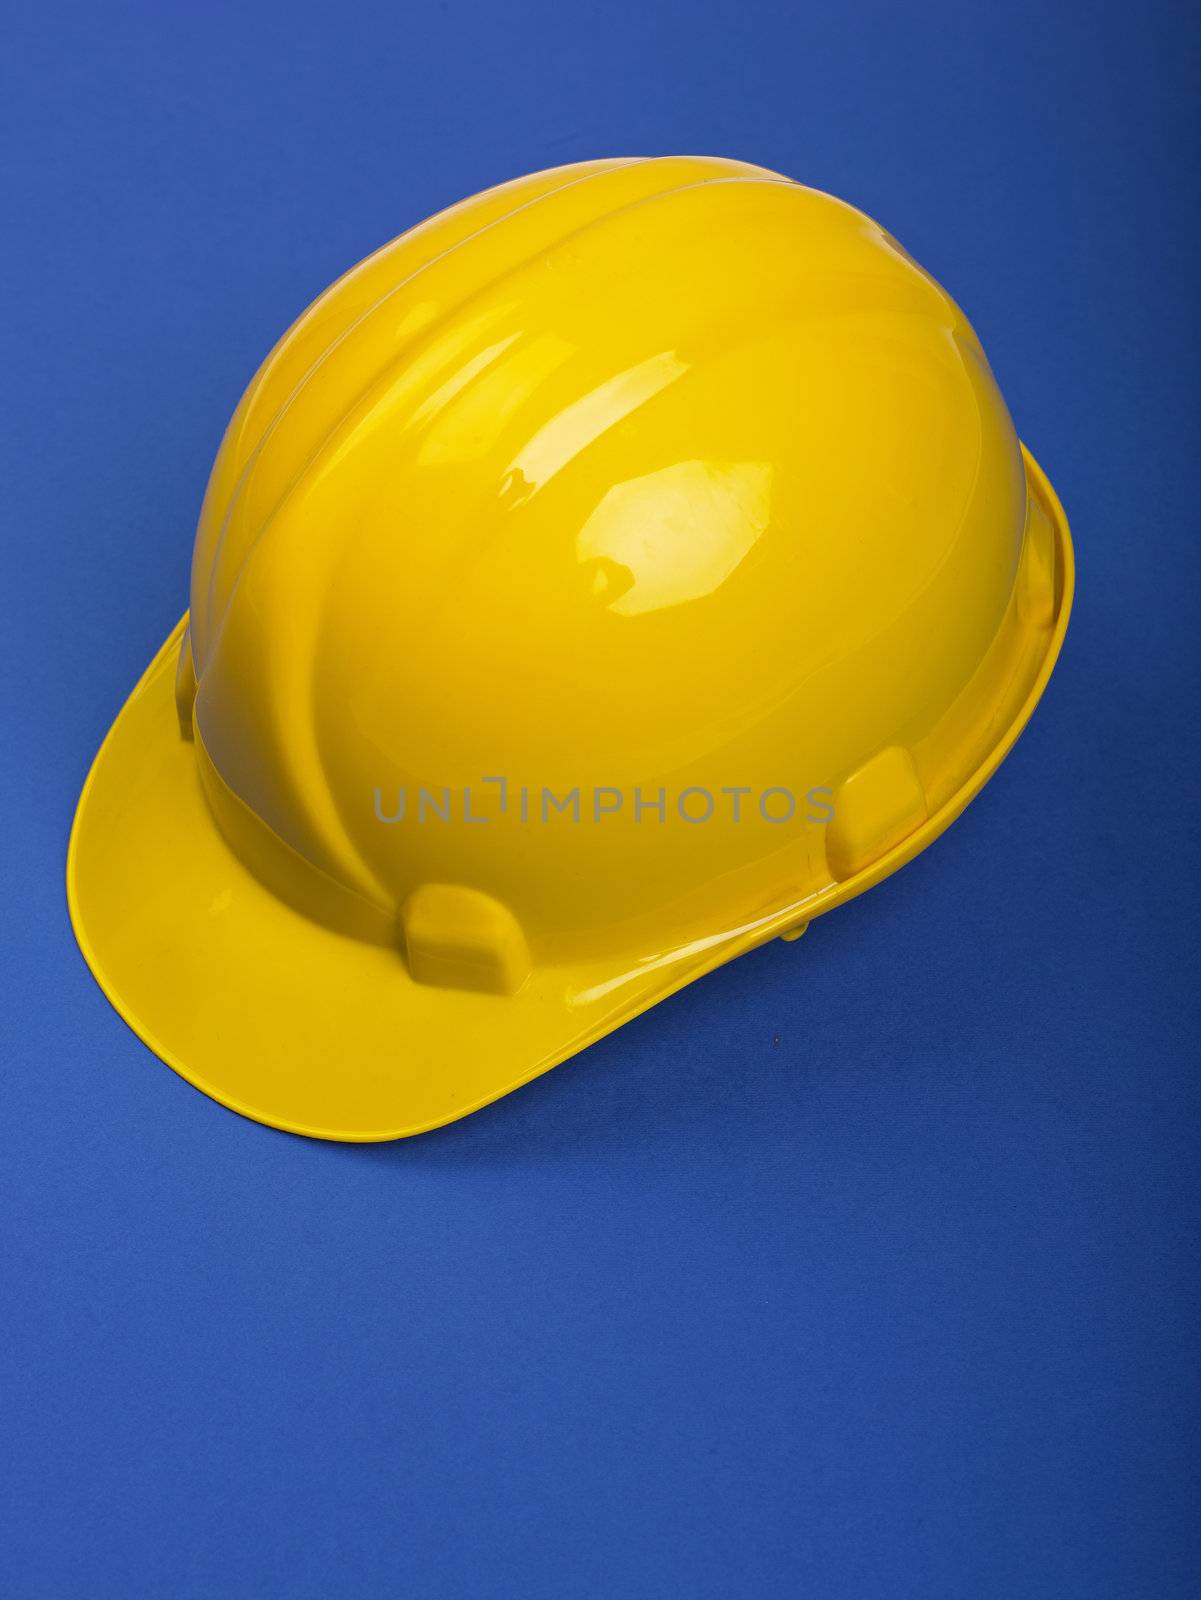 HYellow ardhat hard hat Helmet on Blue